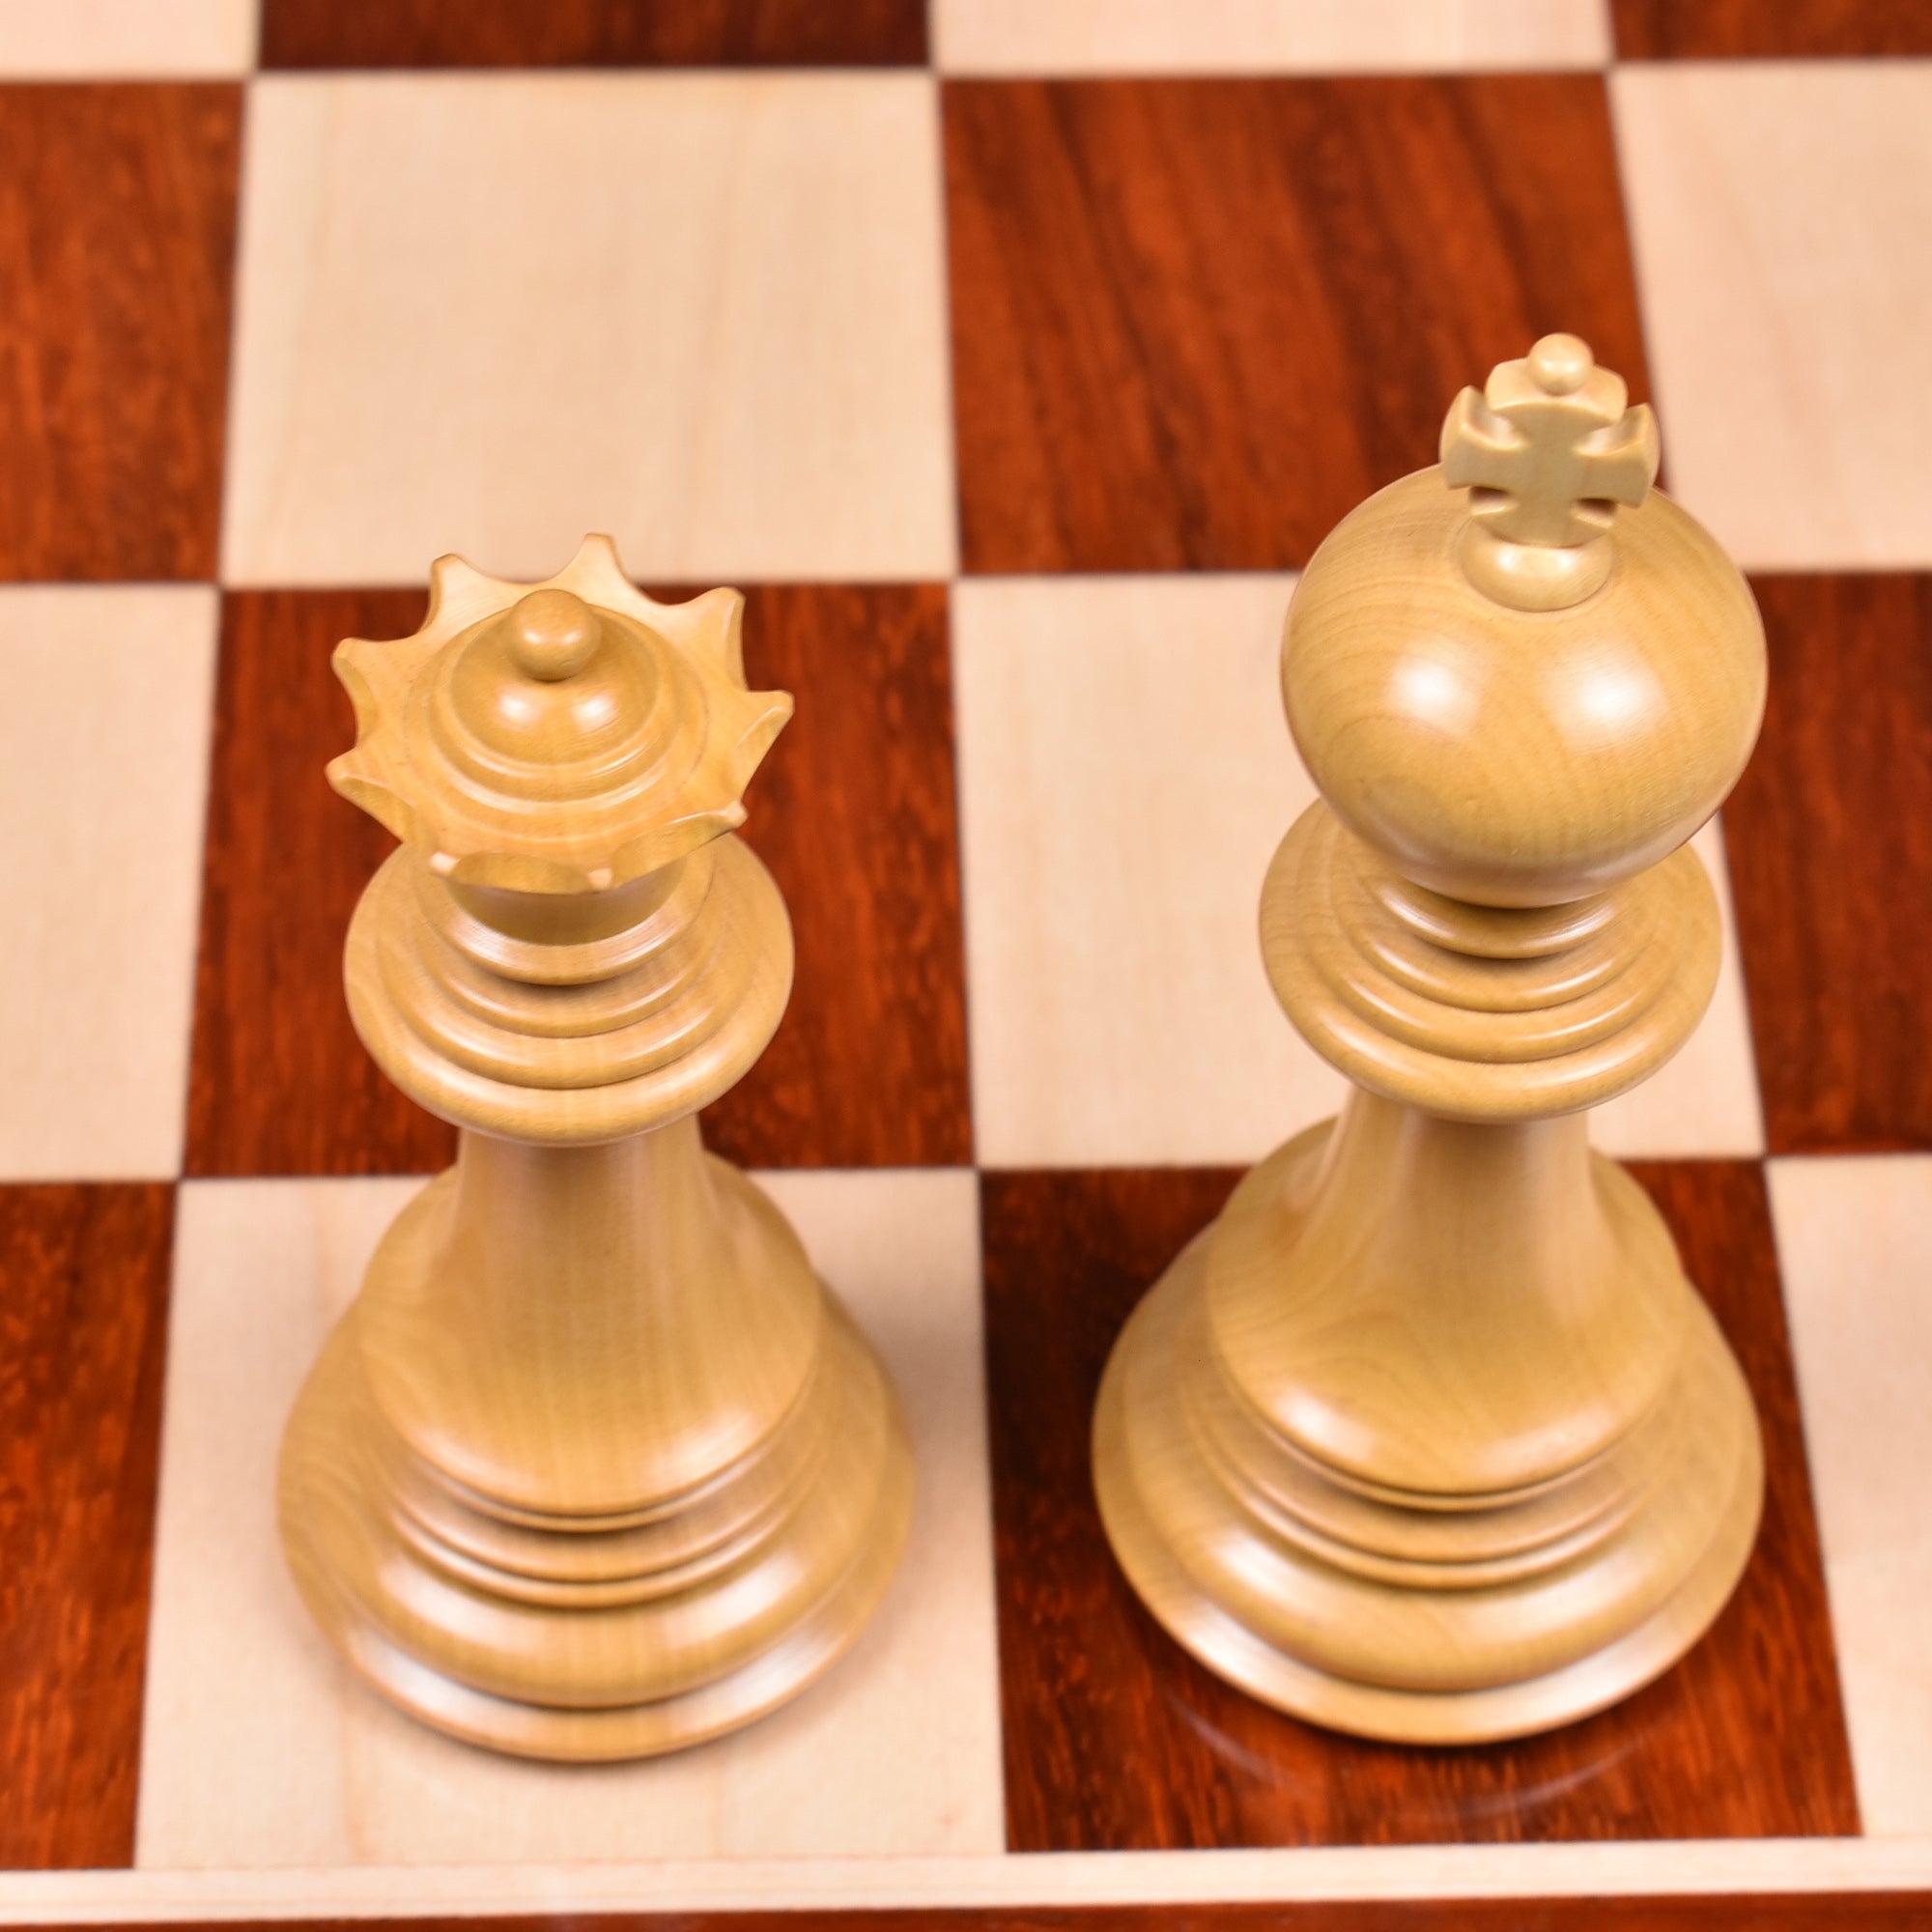  Mogul Staunton Luxury Chess Pieces Only Set 